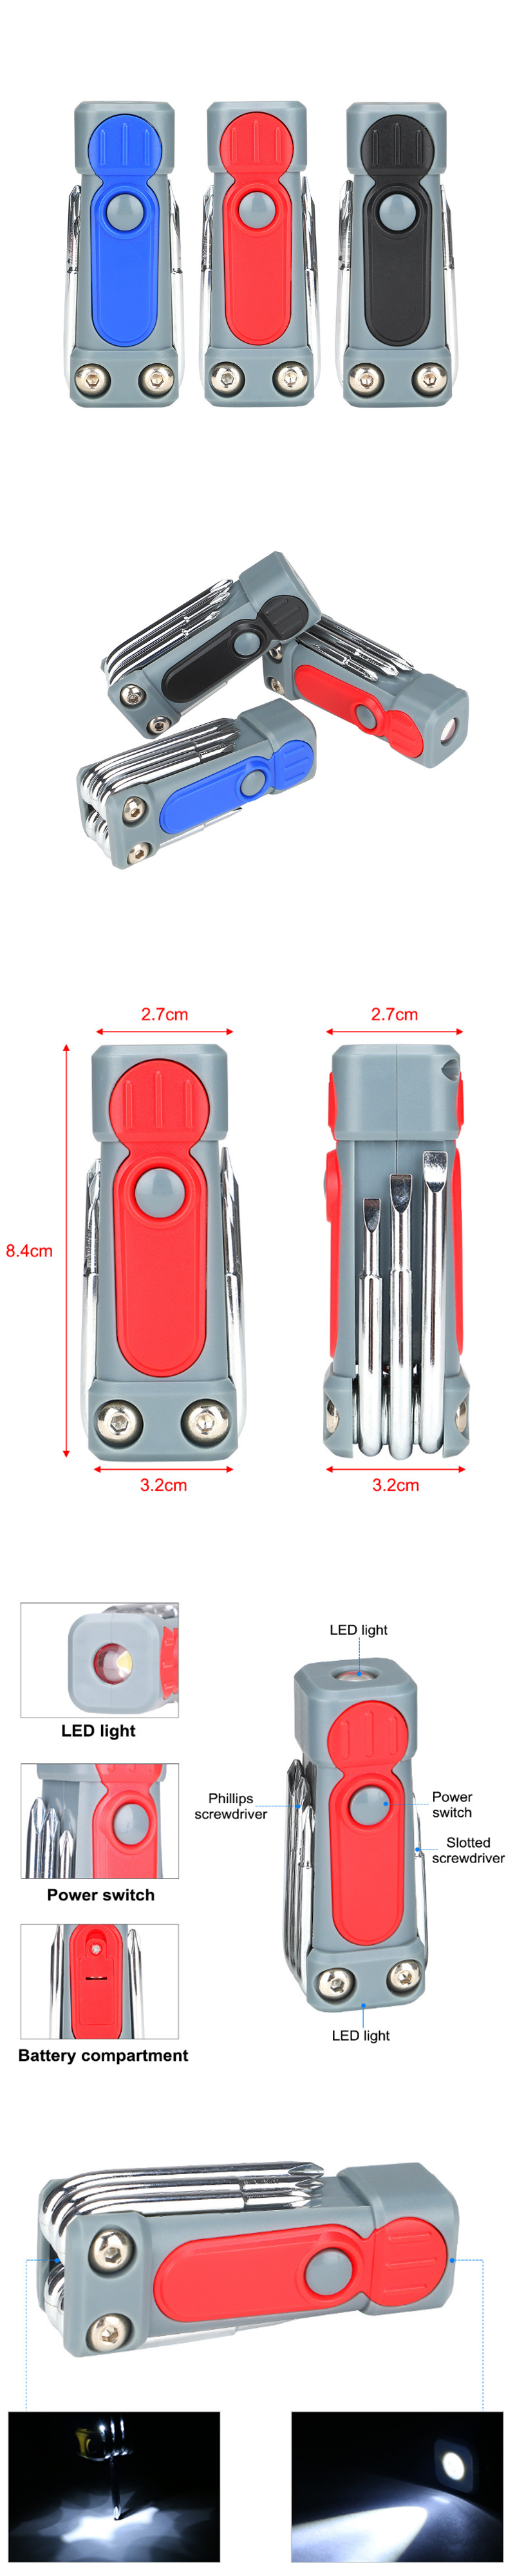 Mini-Multifunction-Tools-LED-Flashlight-Folding-Screwdriver-Set-Hunting-Fishing-1664461